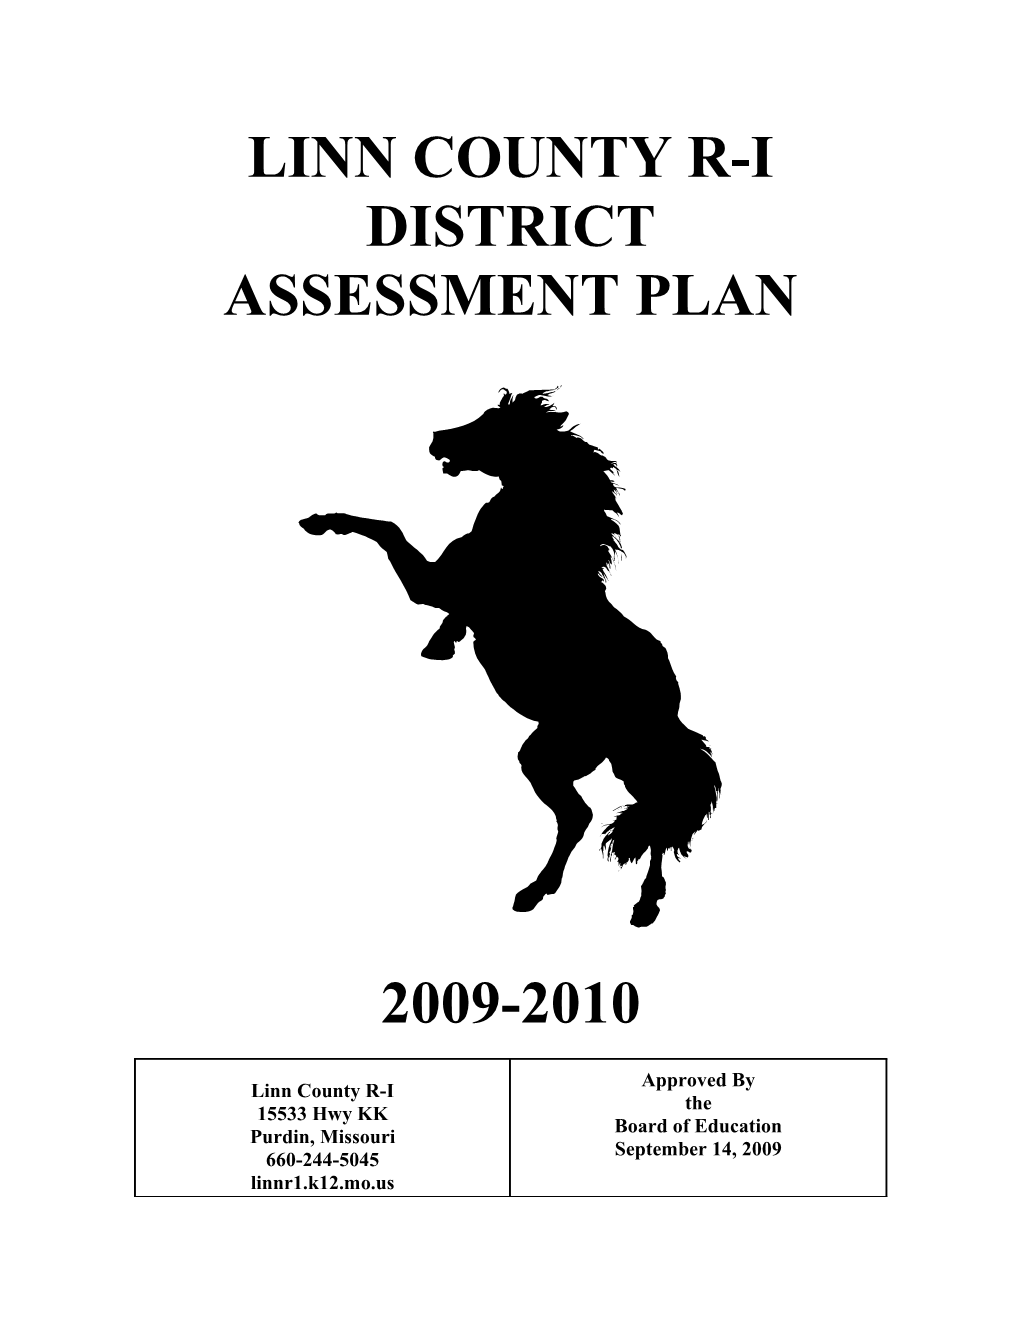 Linn County R-I District Assessment Plan